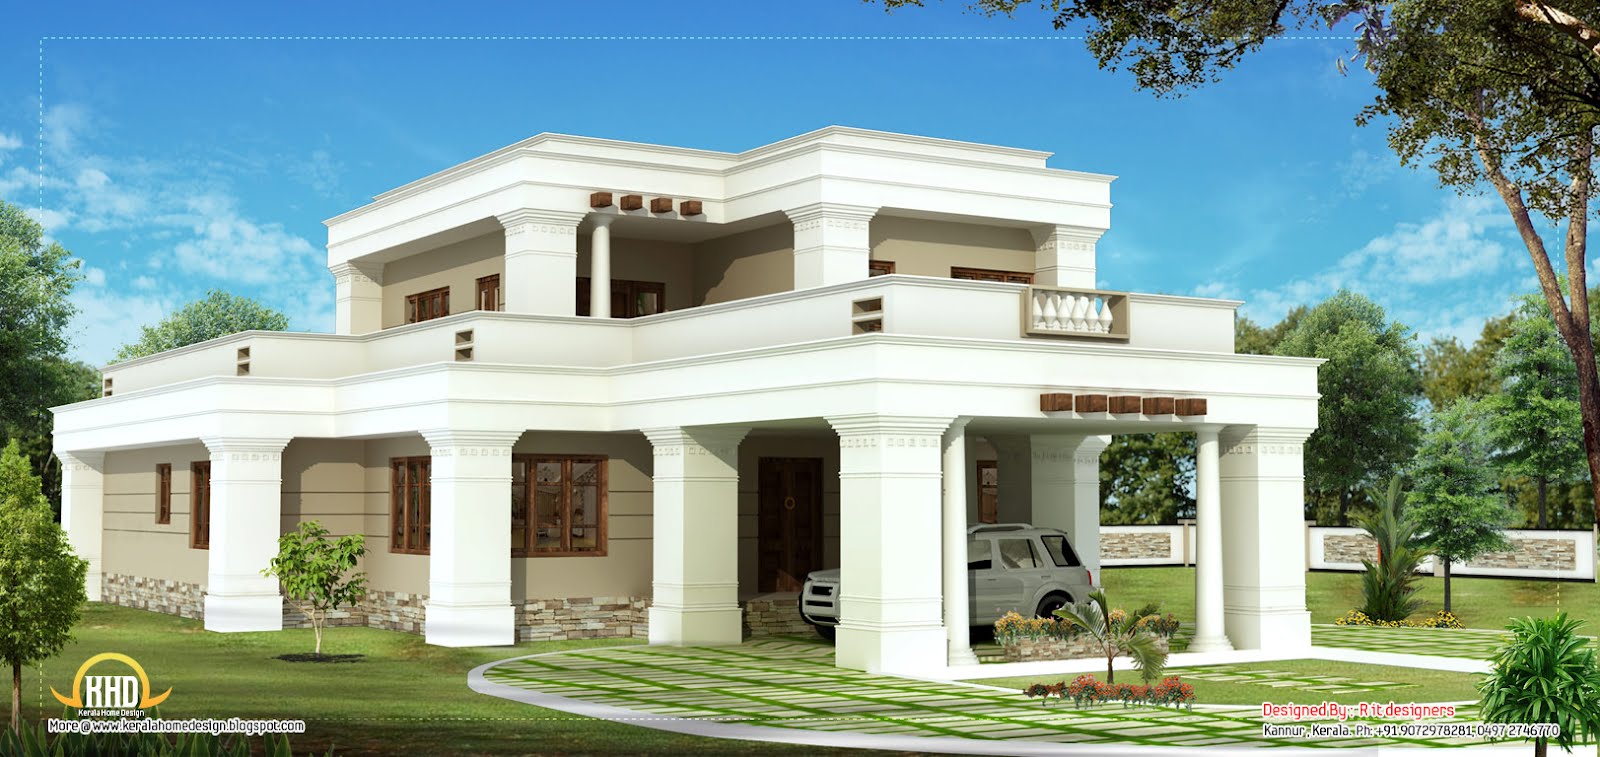  home design  2615 Sq. Ft.  Kerala home design  Architecture house